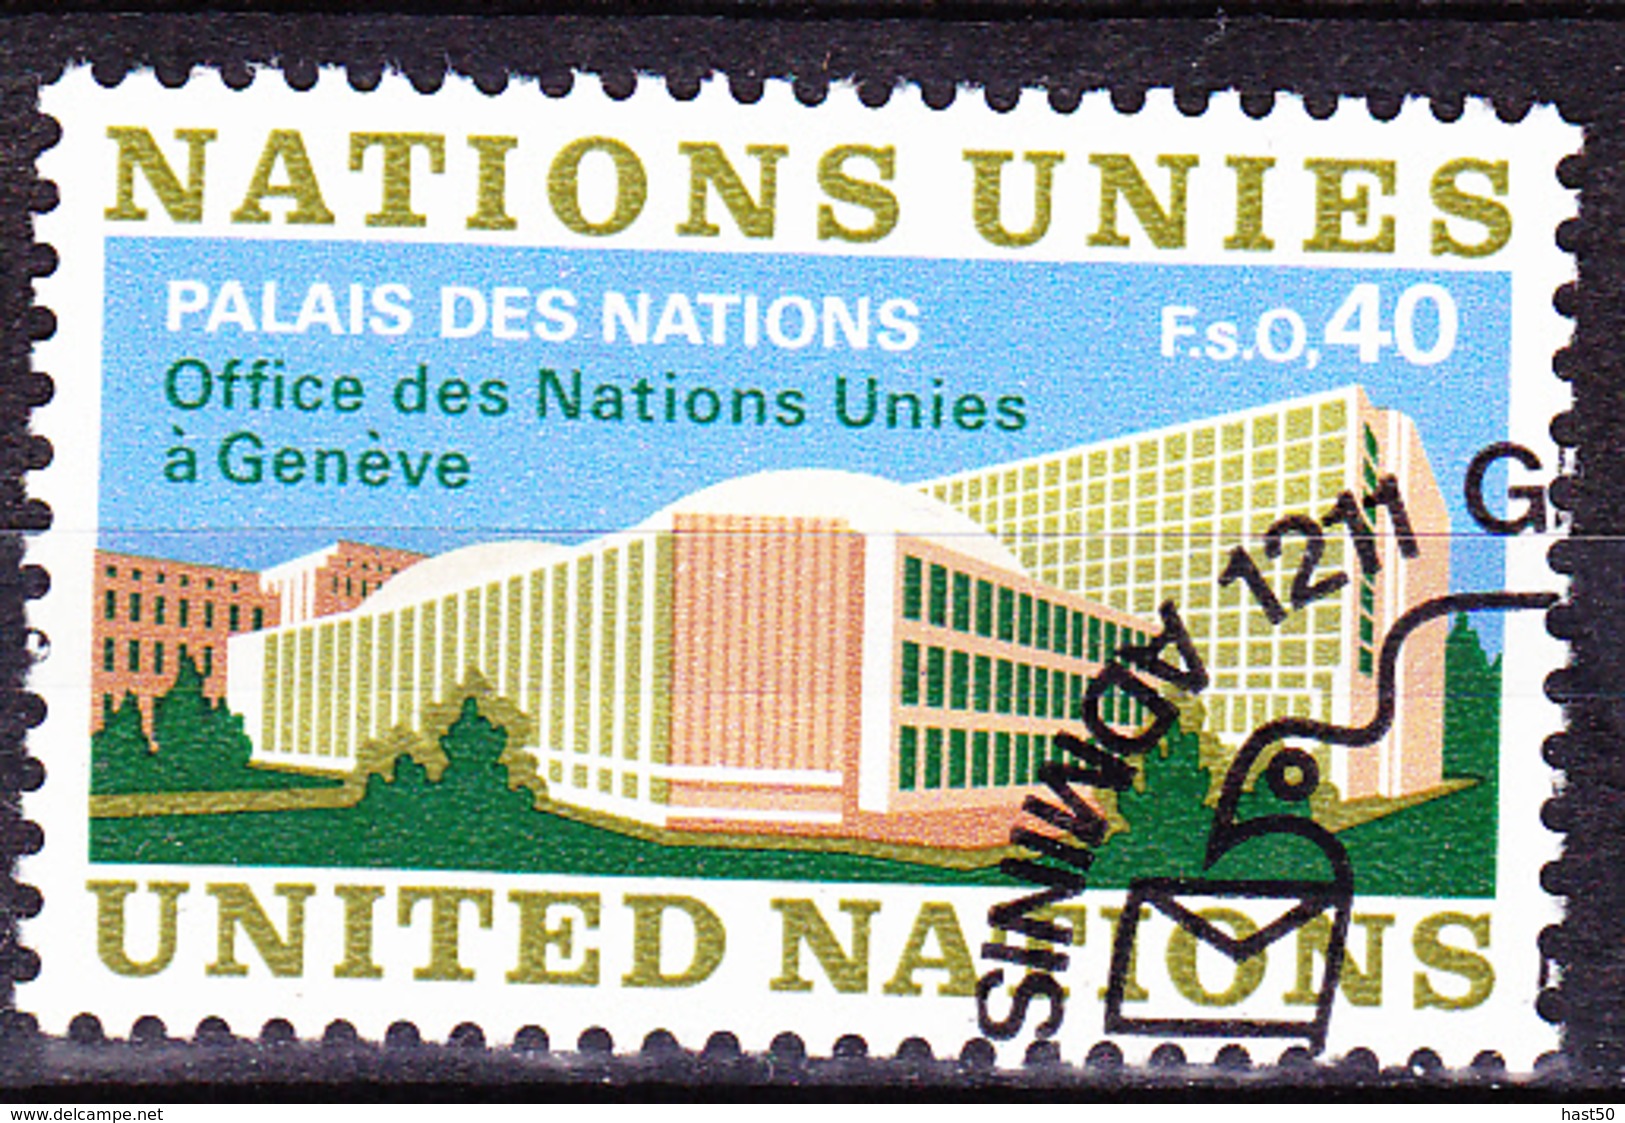 UNO Genf Geneva Geneve - Freimarke (MiNr. 22) 1972 - Gest Used Obl  !!lesen/read/lire!! - Oblitérés